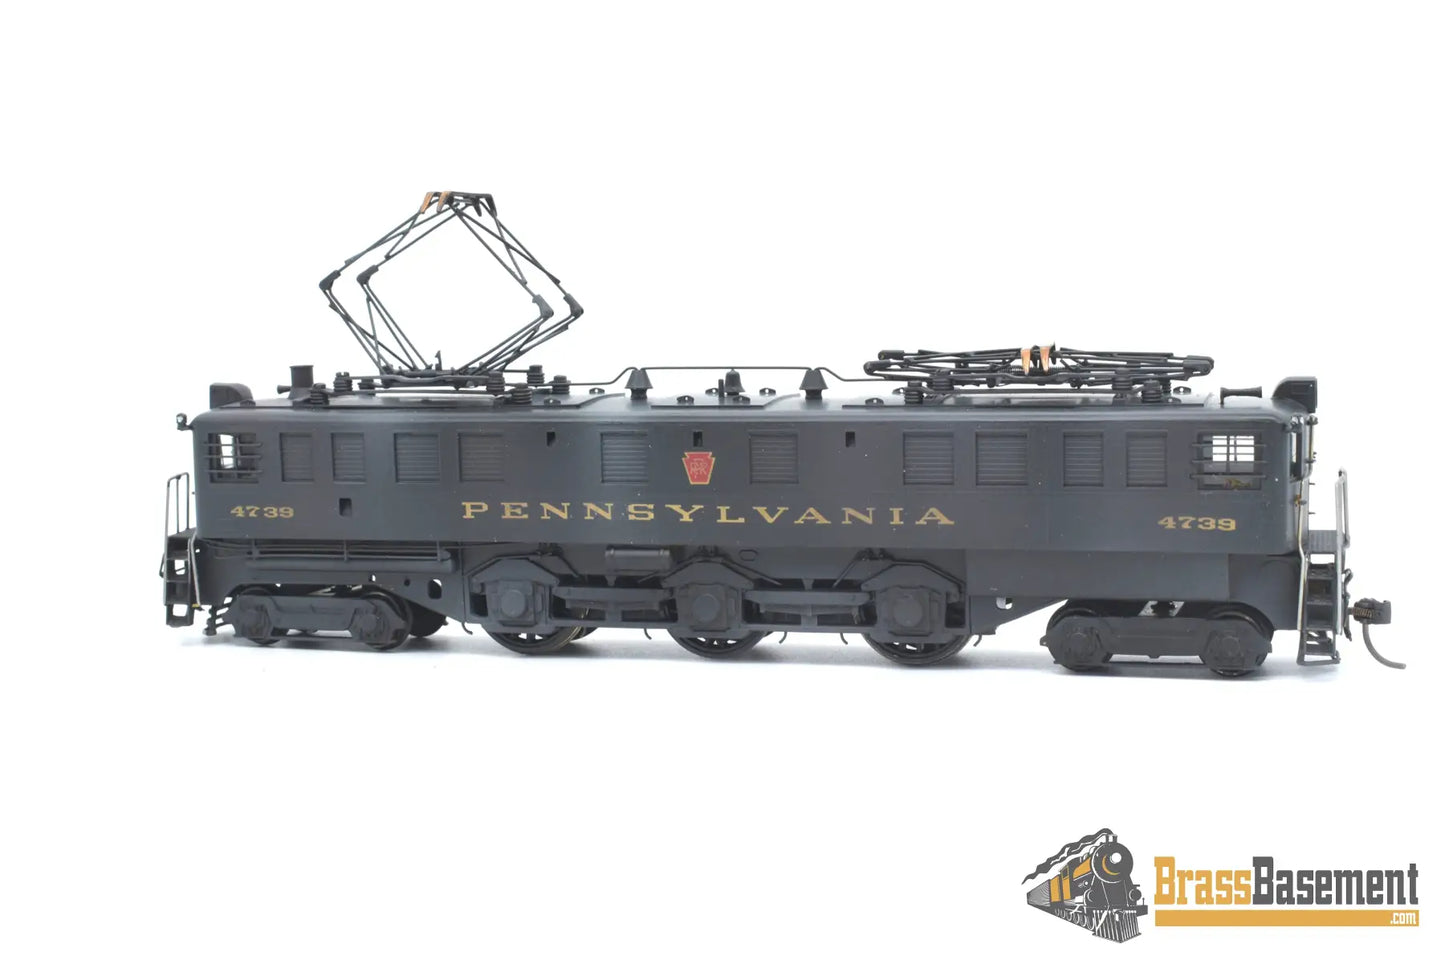 Ho Brass - Alco Prr Pennsylvania Railroad P5A Electric Custom Paint